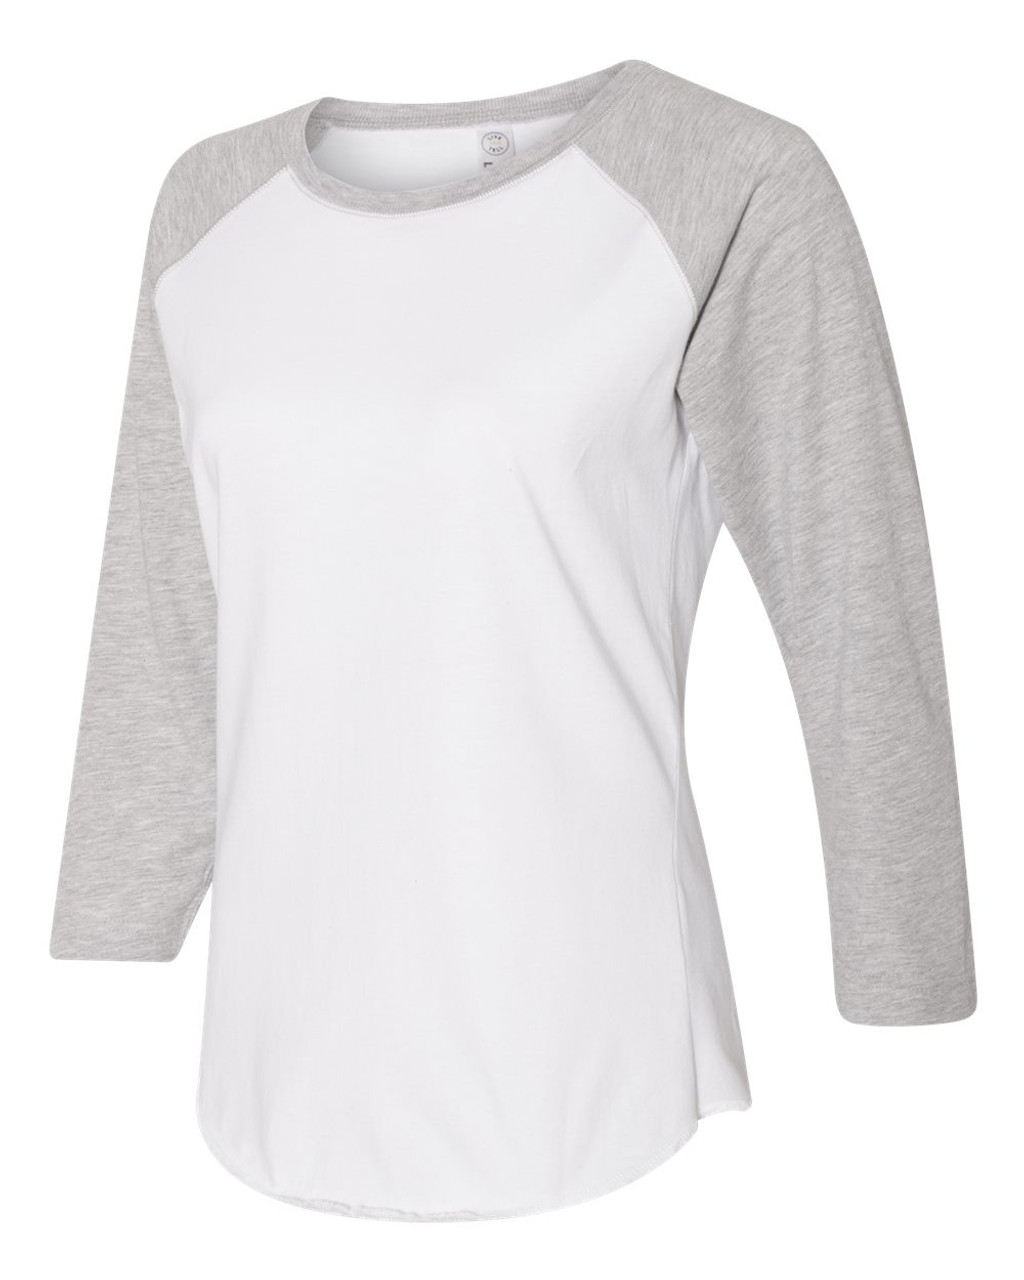 Custom Vintage Baseball Tee - Unisex 3/4 Sleeve Raglan T-Shirt | Personalized White/Black Tops from Customized Girl